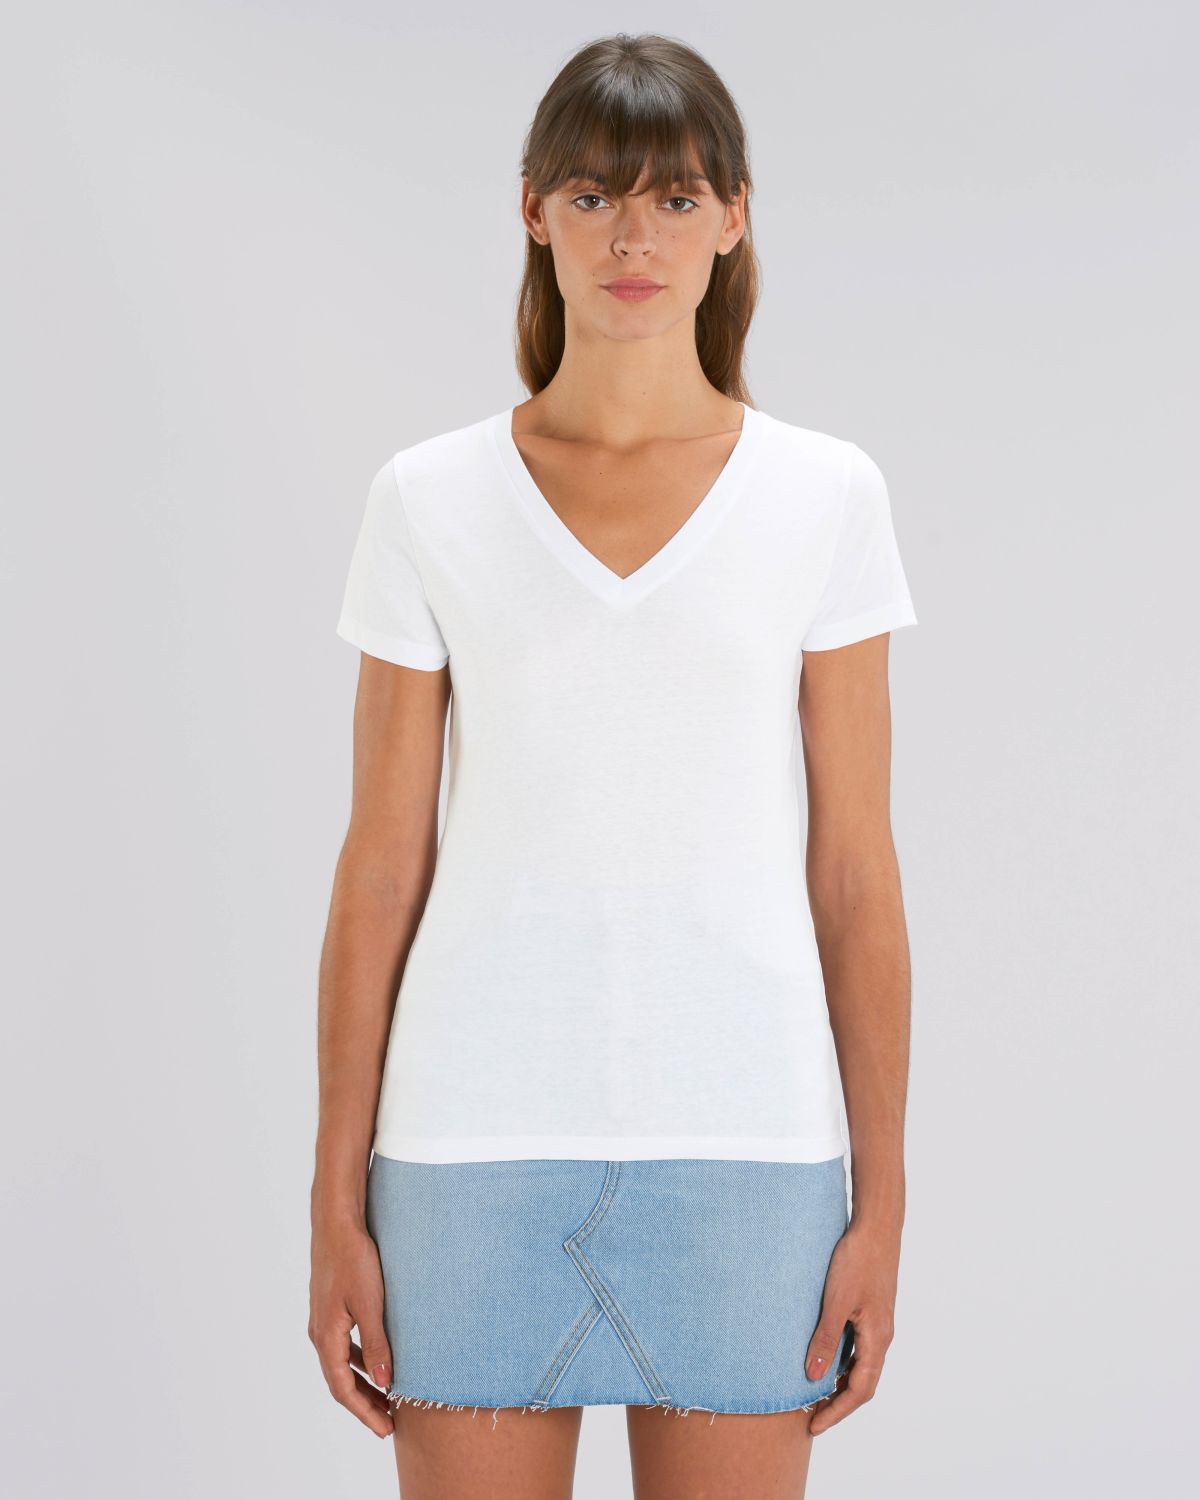 Teeshirt Femme 100% Coton Organique – Col V